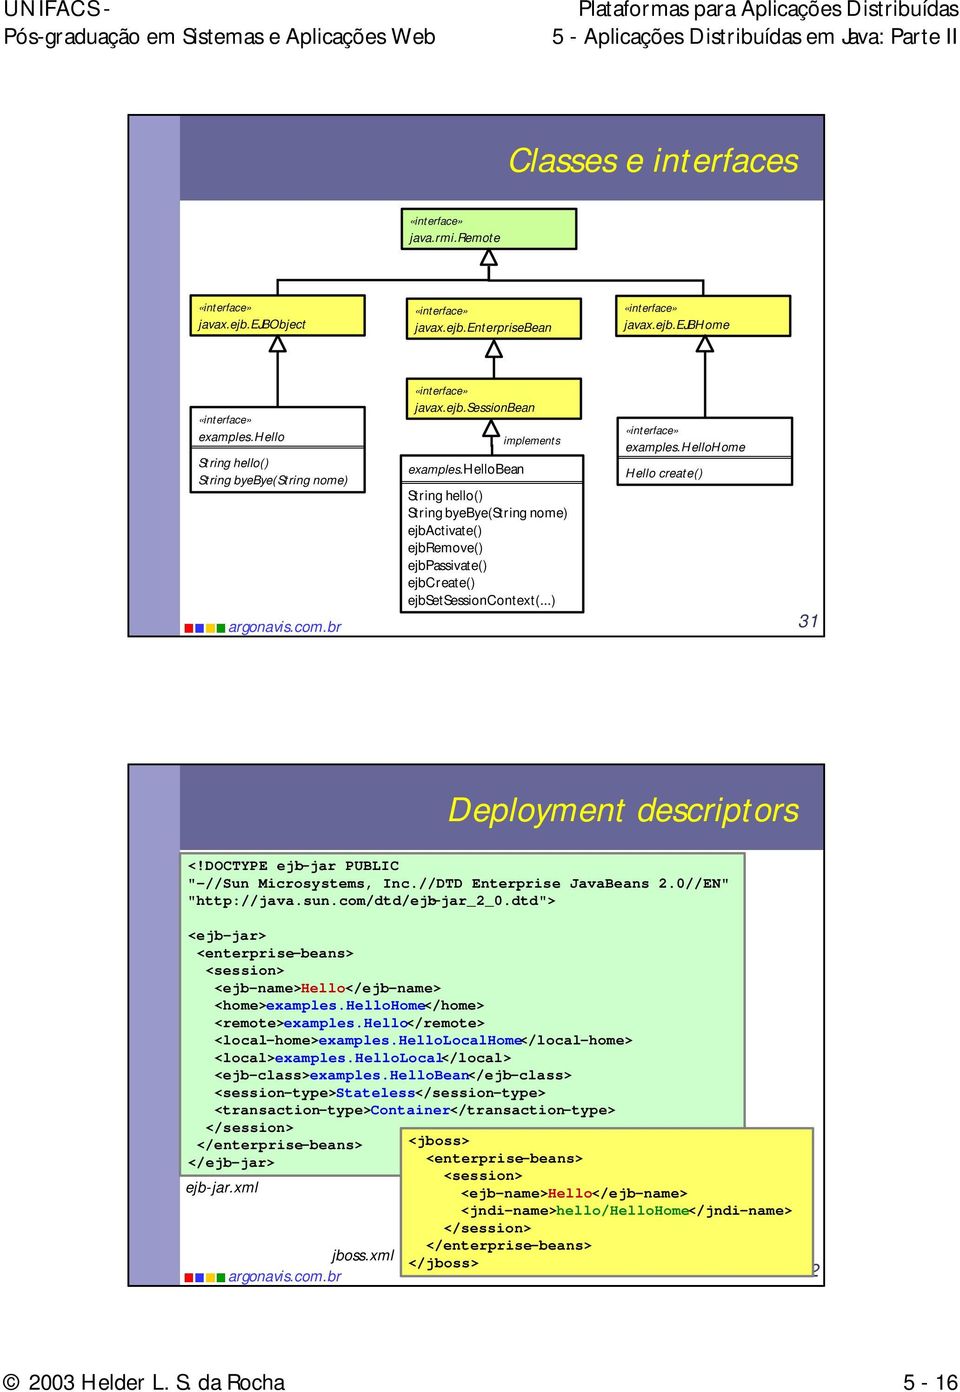 hellohome Hello create() 31 Deployment descriptors <!DOCTYPE ejb-jar PUBLIC "-//Sun Microsystems, Inc.//DTD Enterprise JavaBeans 2.0//EN" "http://java.sun.com/dtd/ejb-jar_2_0.